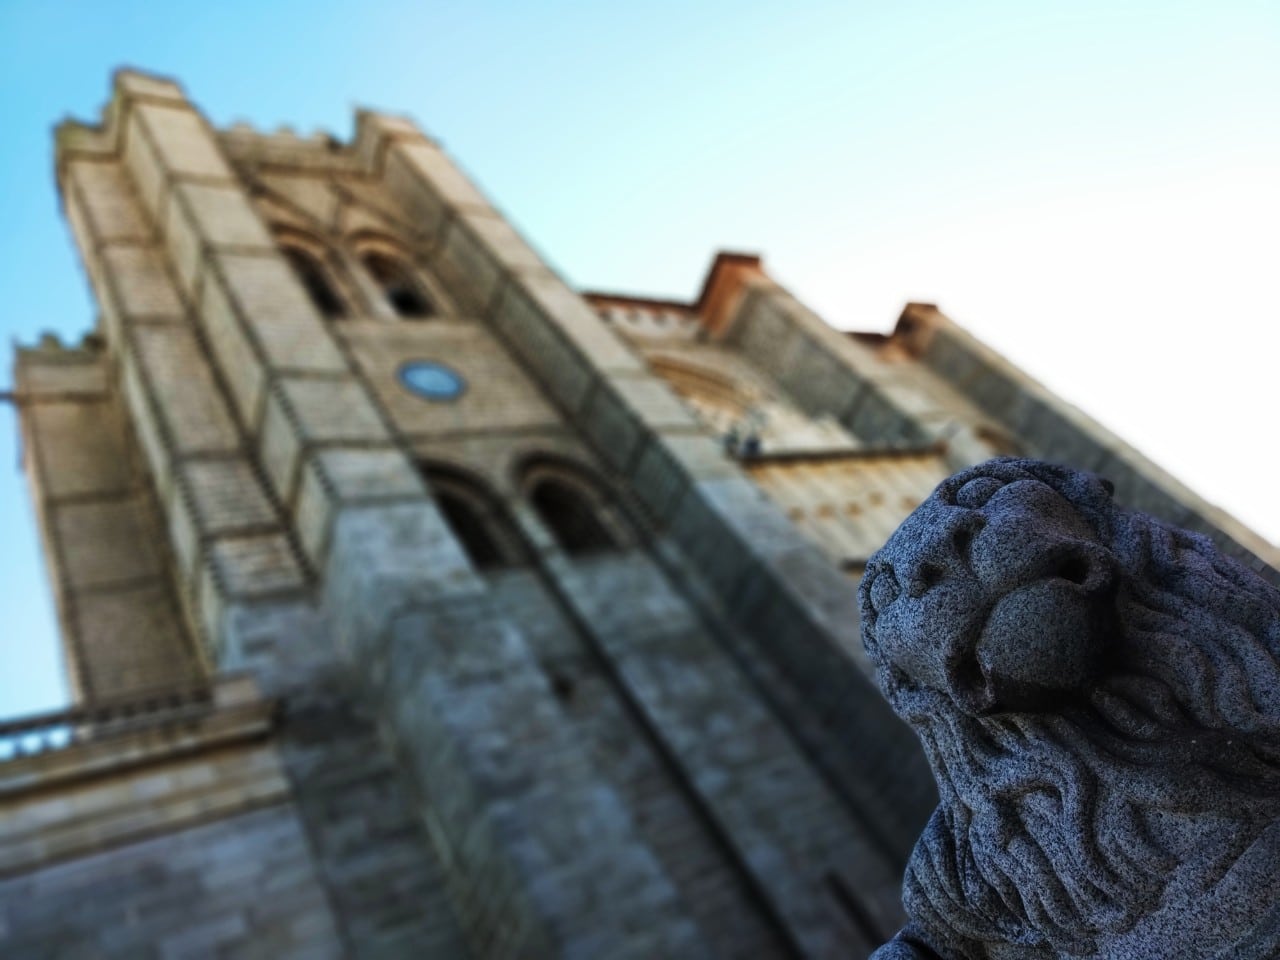 Qué ver en Ávila, España - Catedral